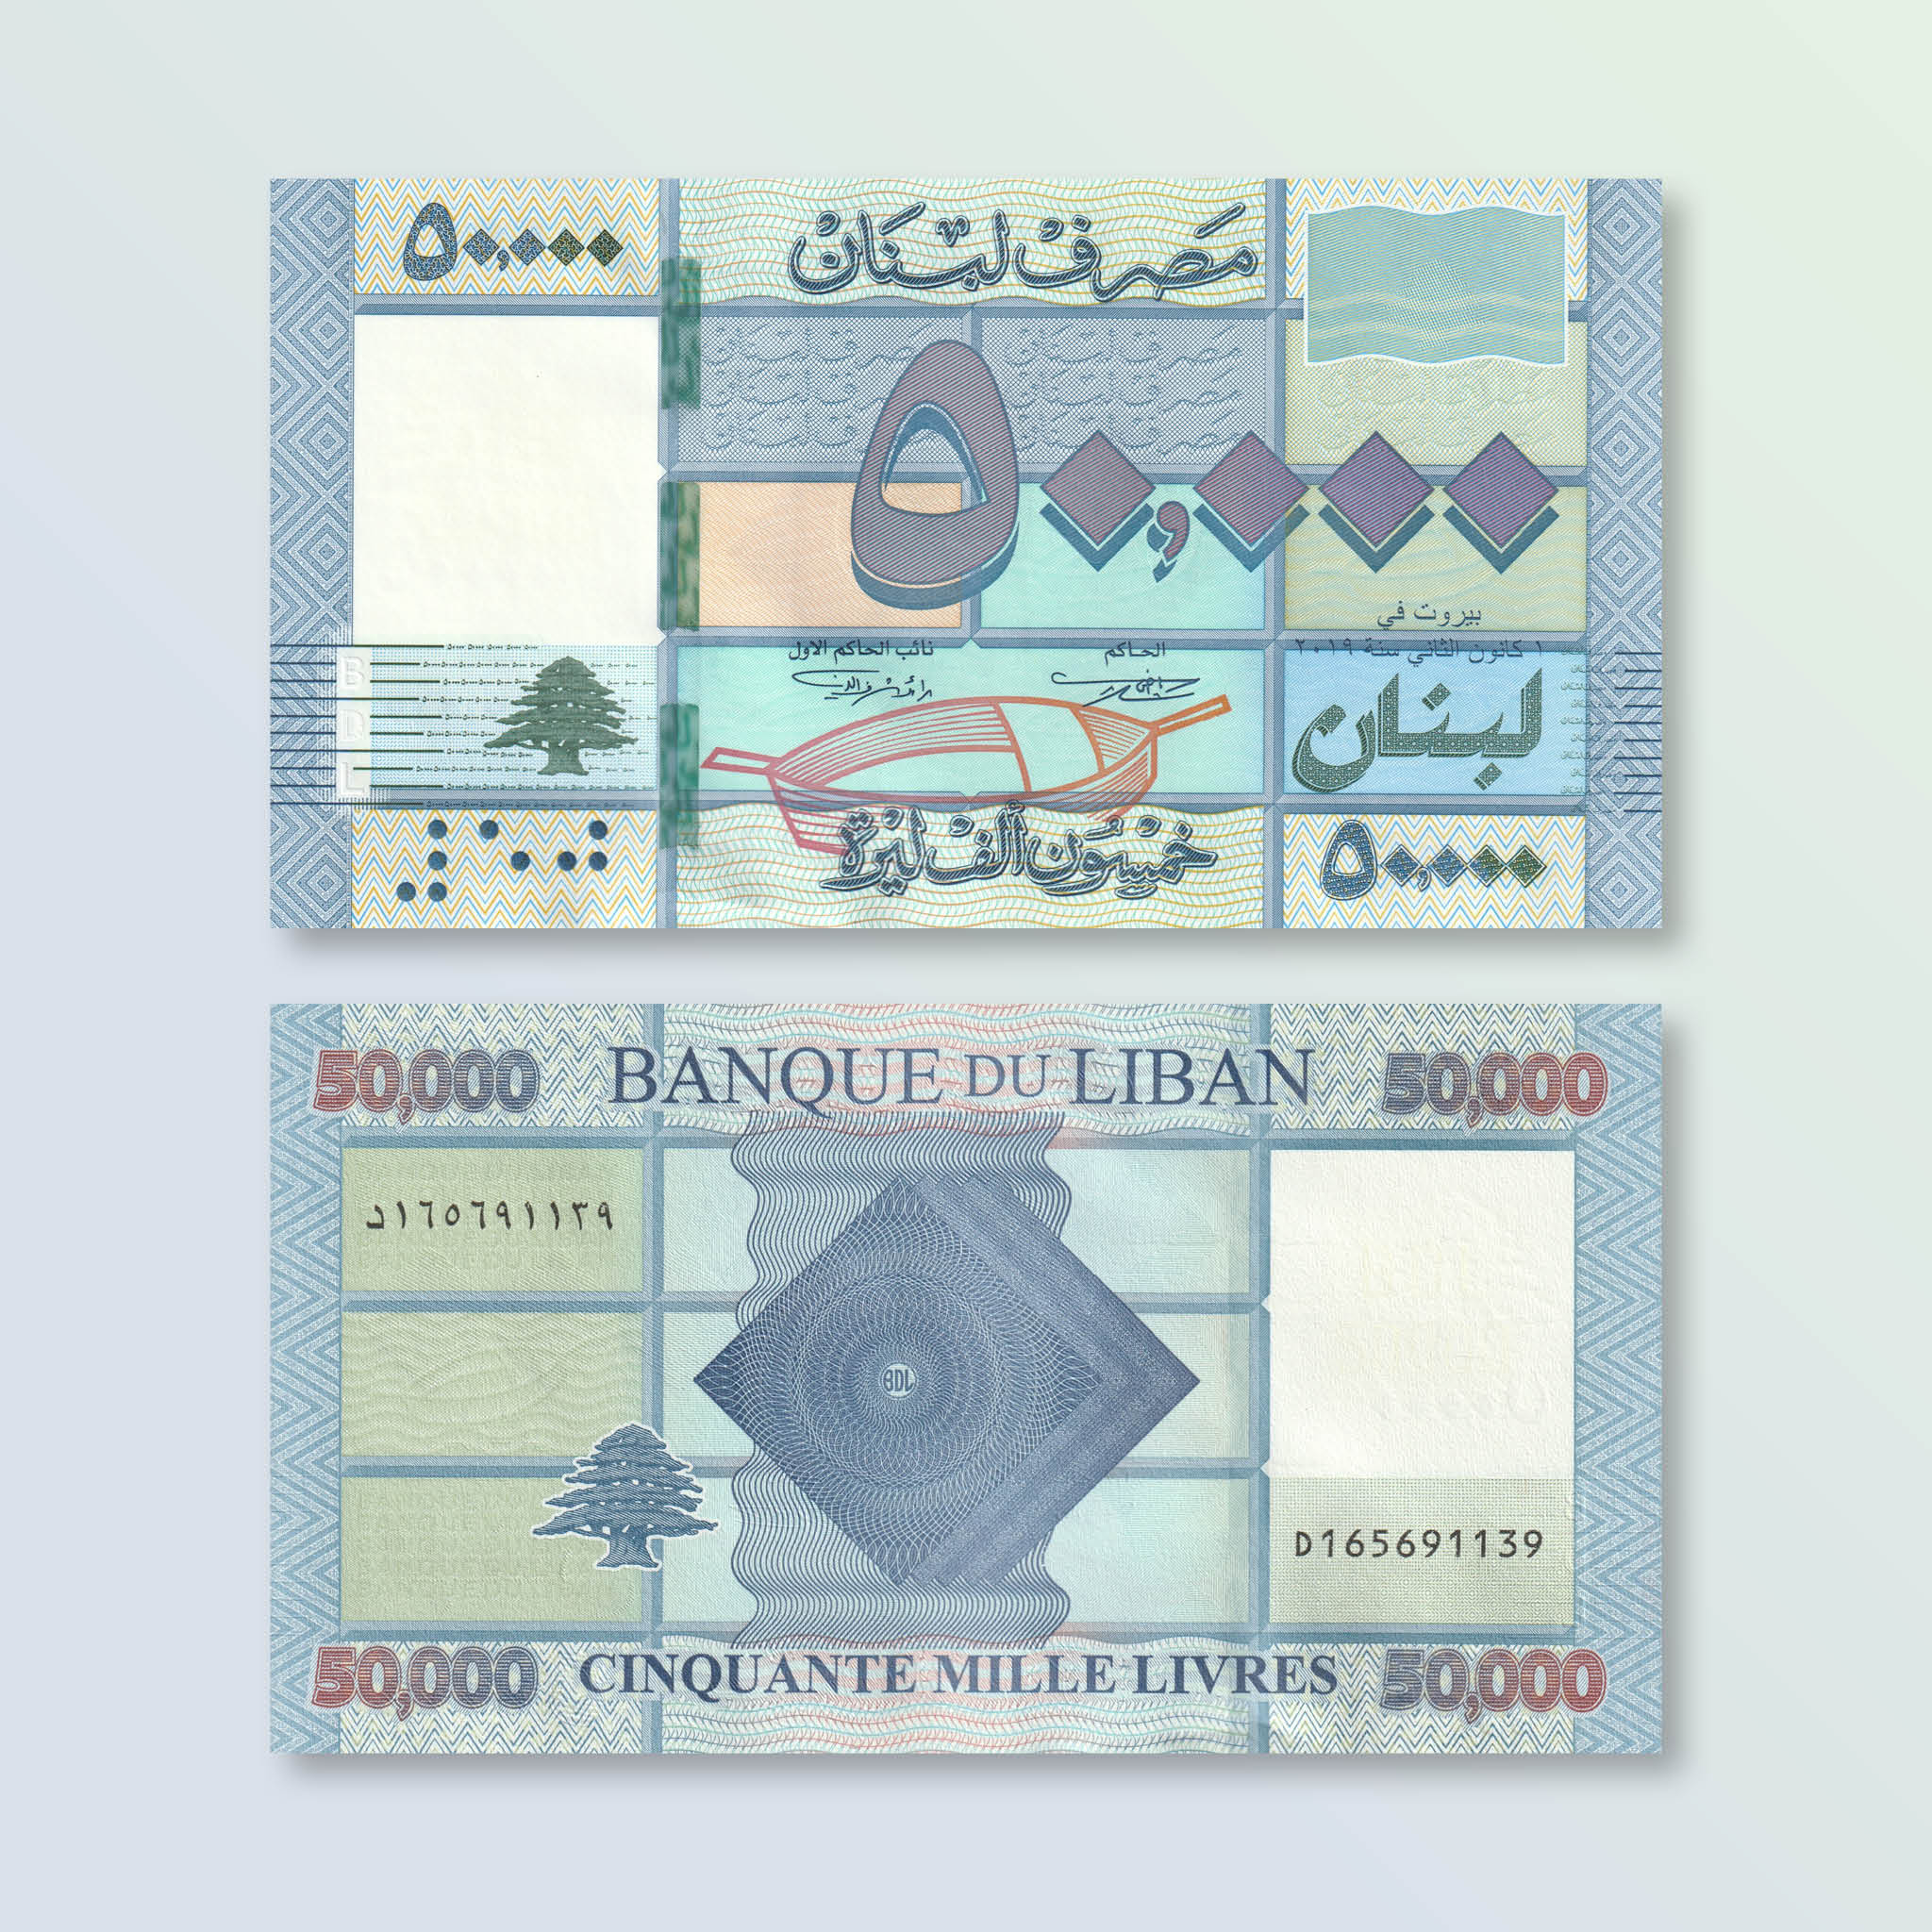 Lebanon 50000 Pounds, 2016, B545a, P94, UNC - Robert's World Money - World Banknotes